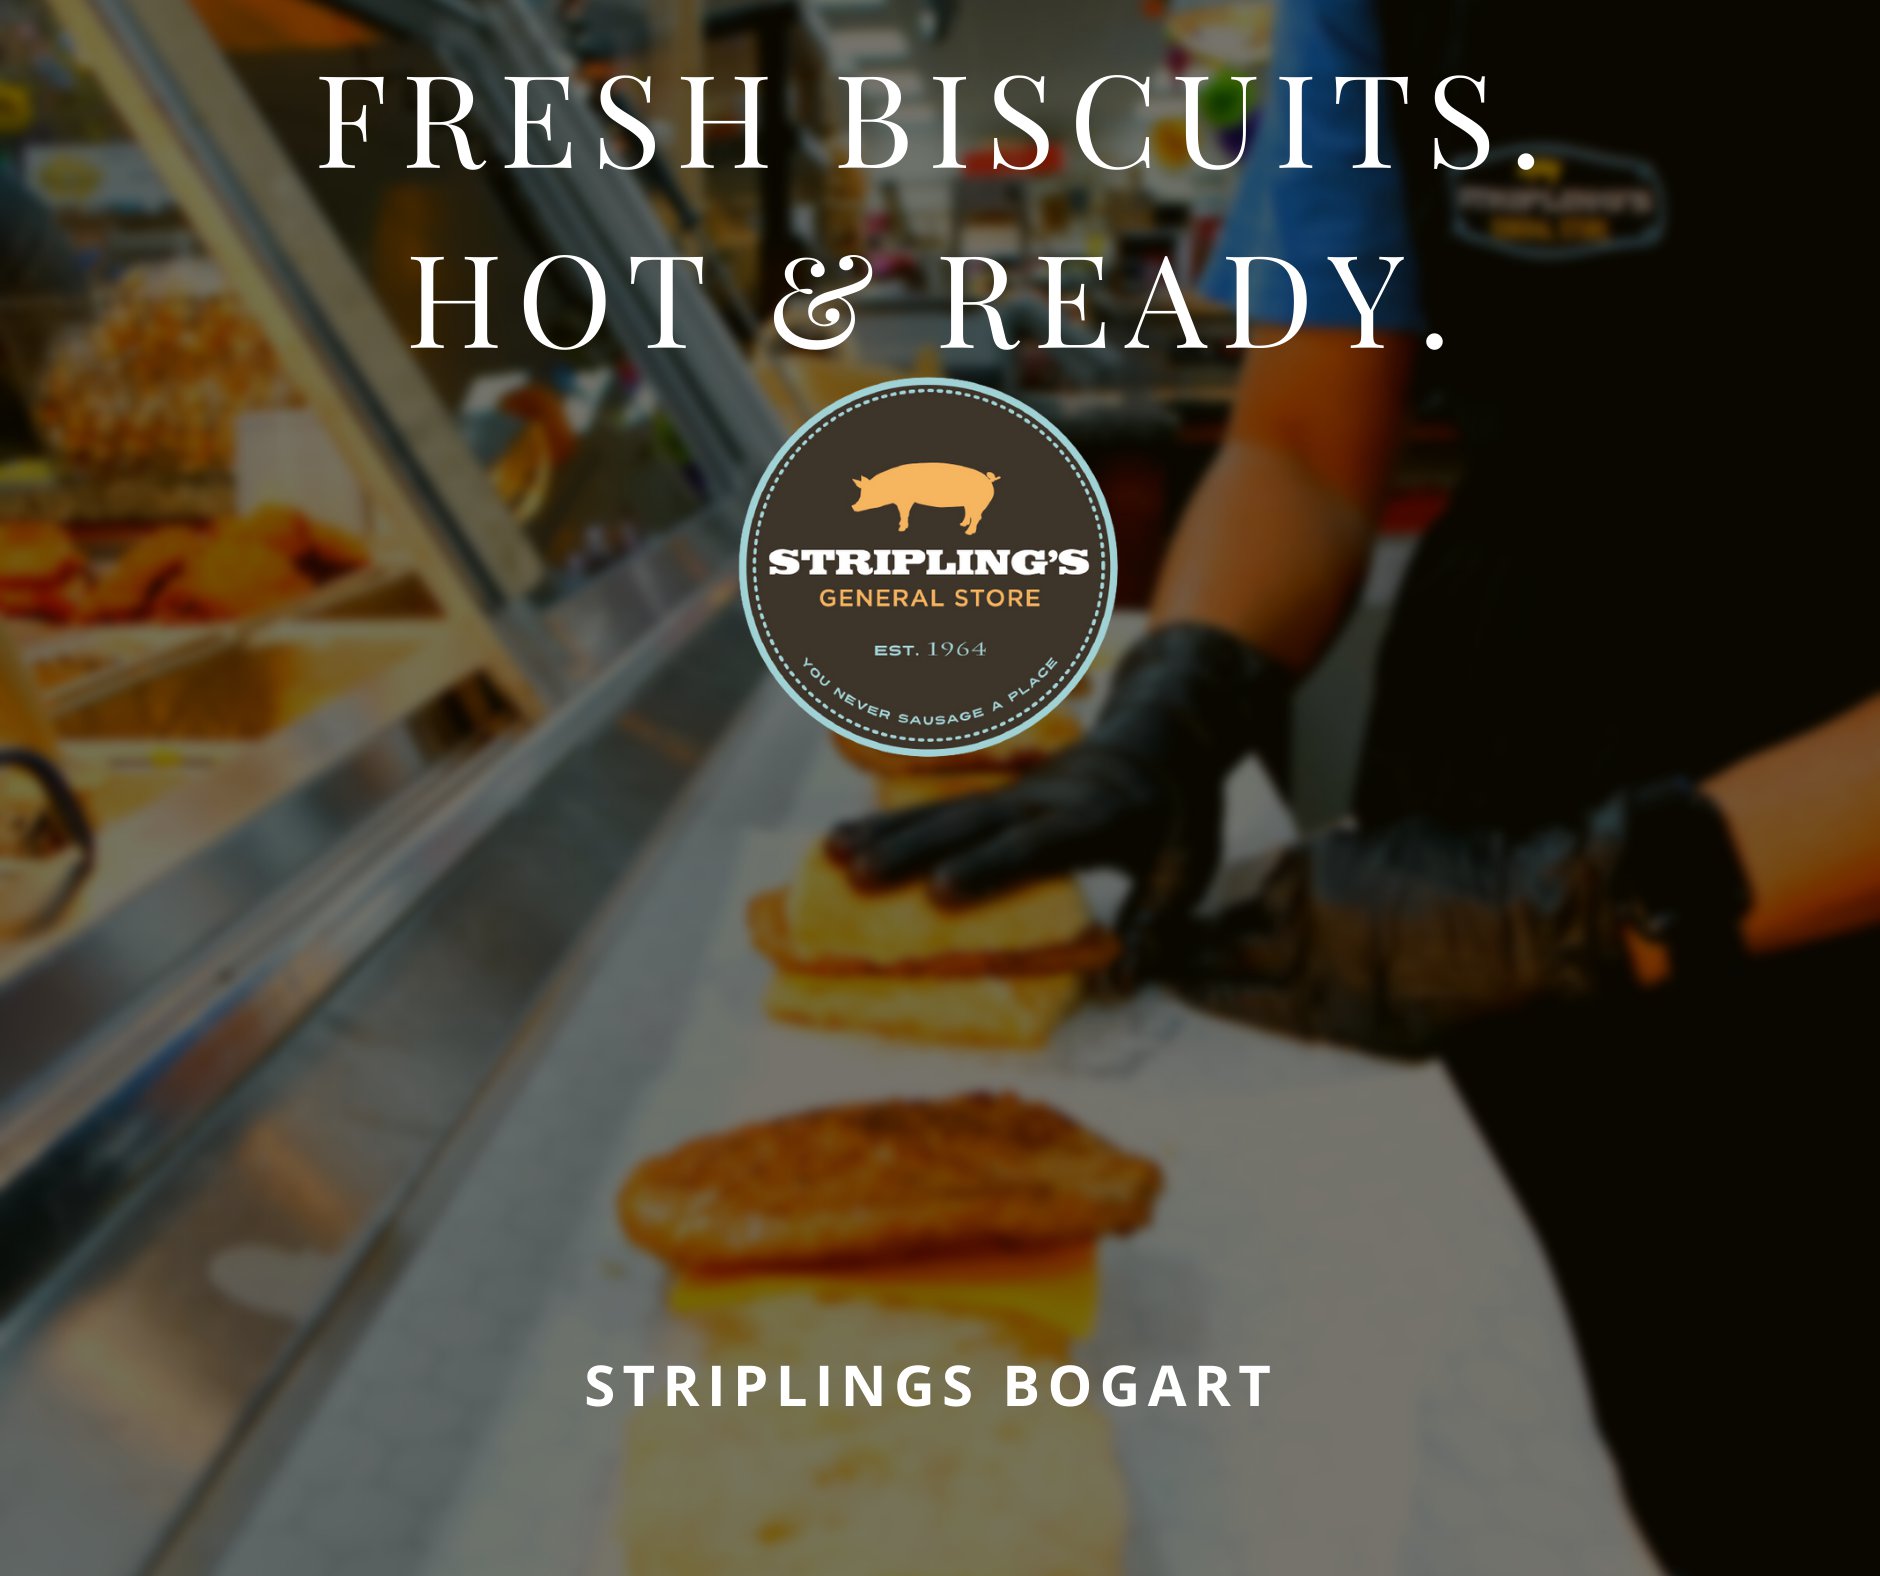 Stripling's General Store Bogart - Fresh Biscuits Hot & Ready
